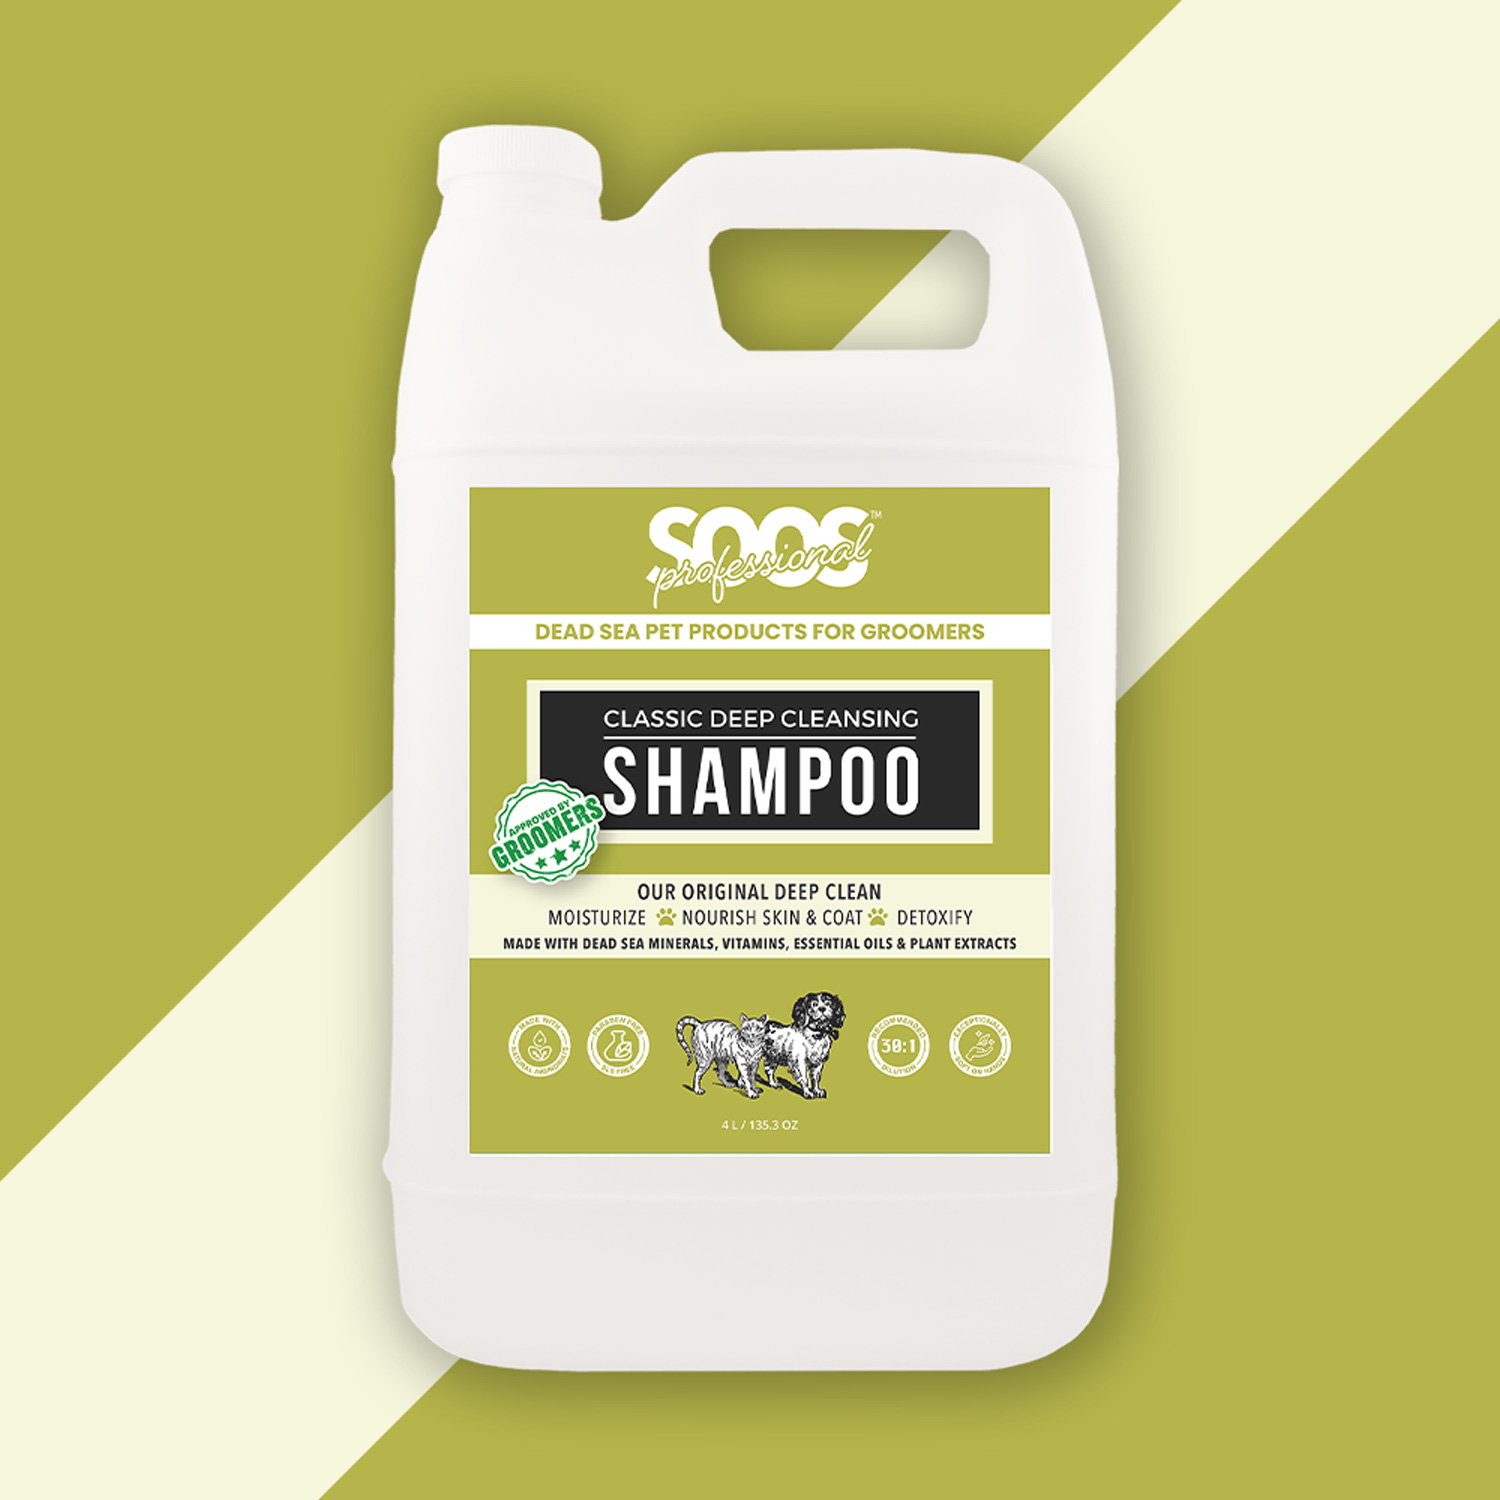 Classic Deep Cleansing Shampoo